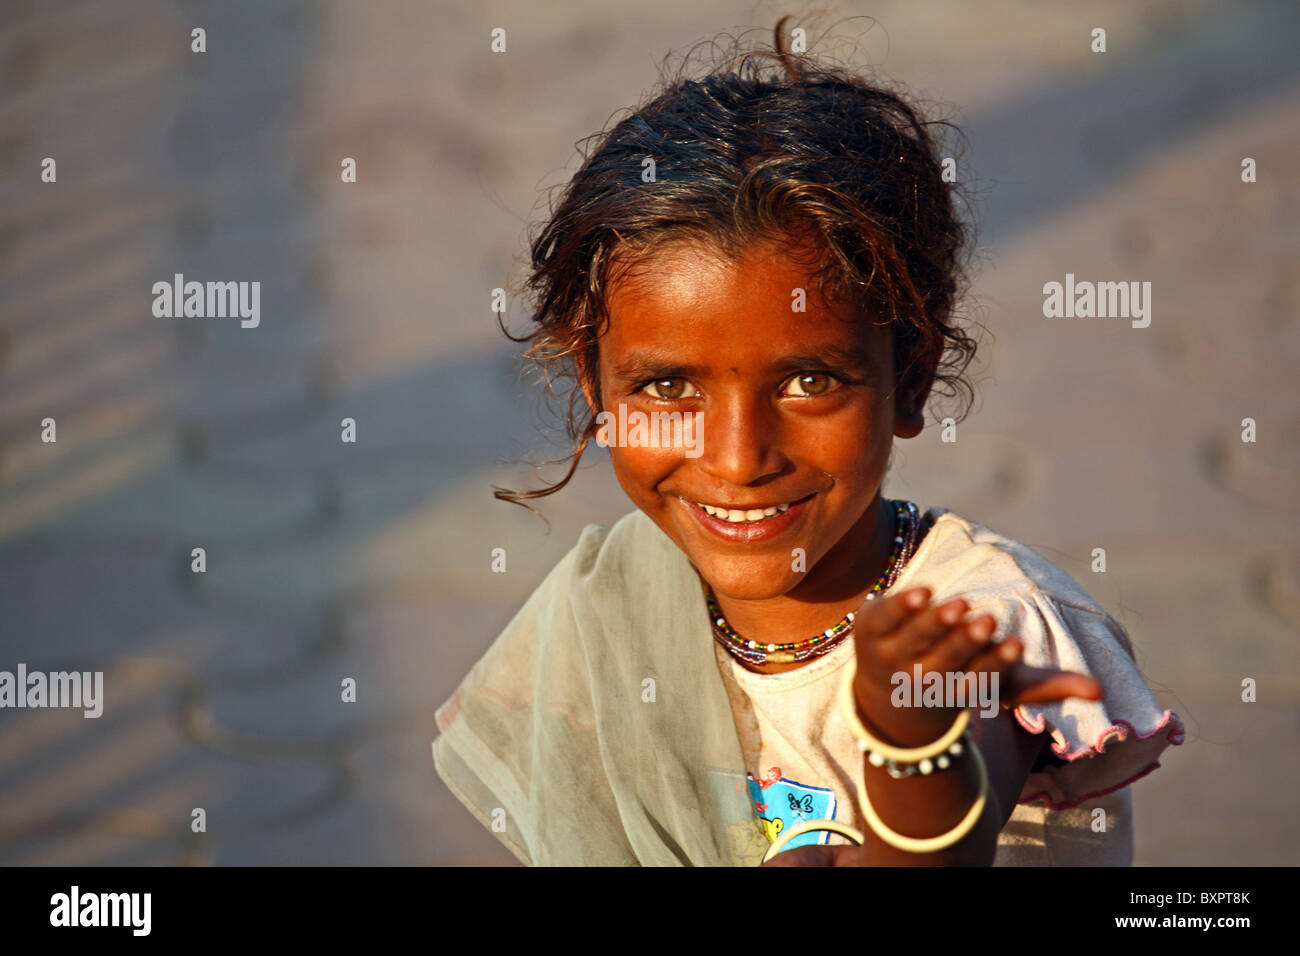 Street Child begging for money in Mumbai, India Stock Photo